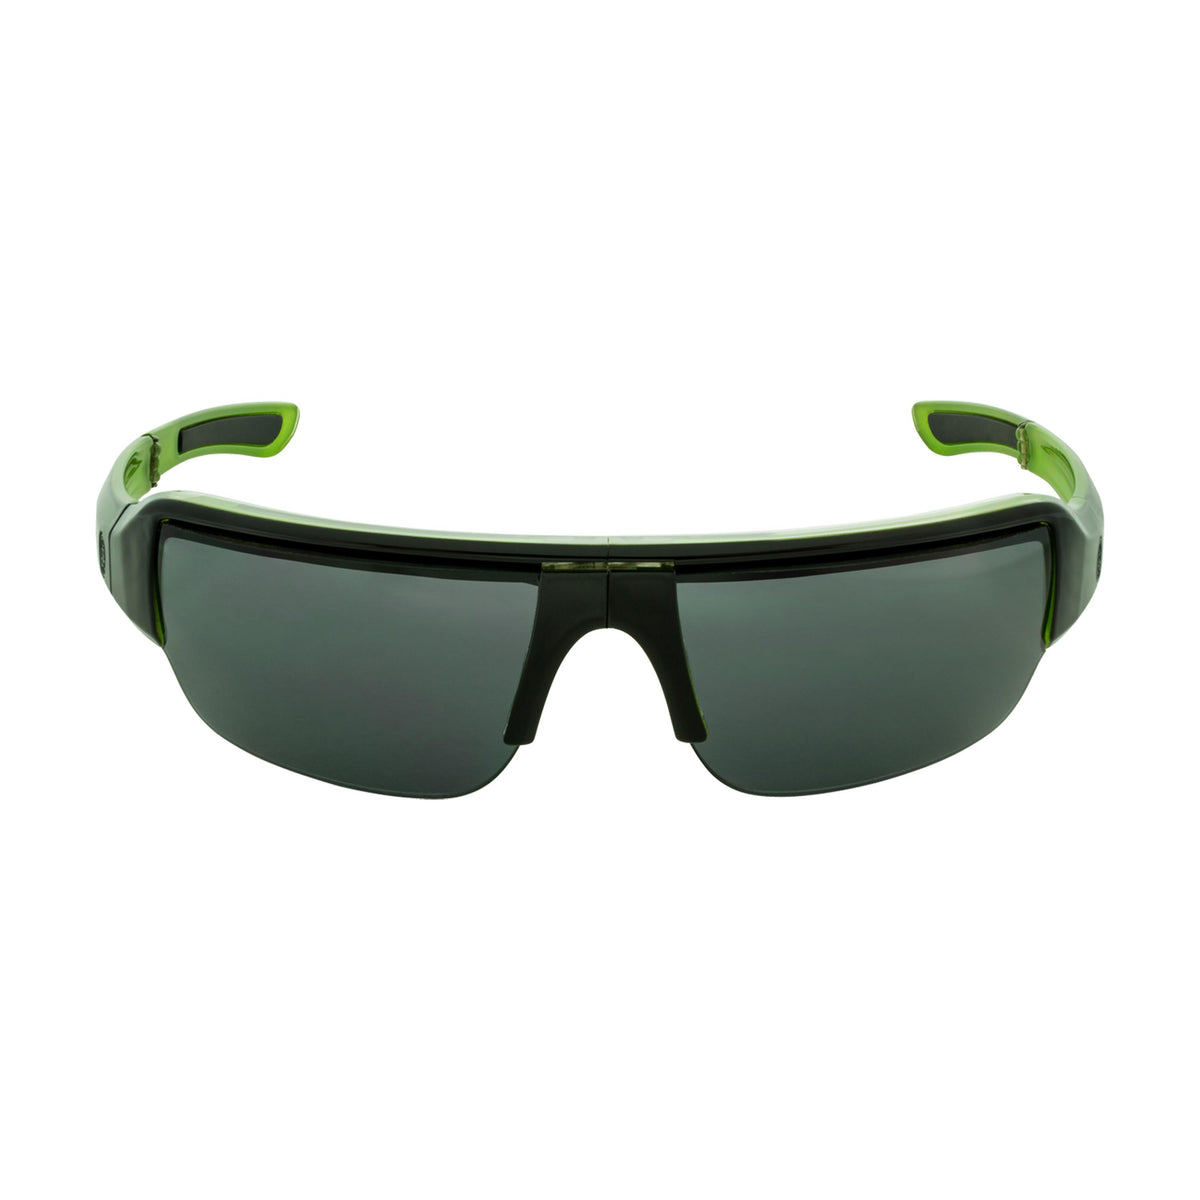 Popticals, Premium Compact Sunglasses, PopGun, 040010-GLGP, Polarized Sunglasses, Gloss Black over Green Crystal Frame, Gray Lenses, Front View